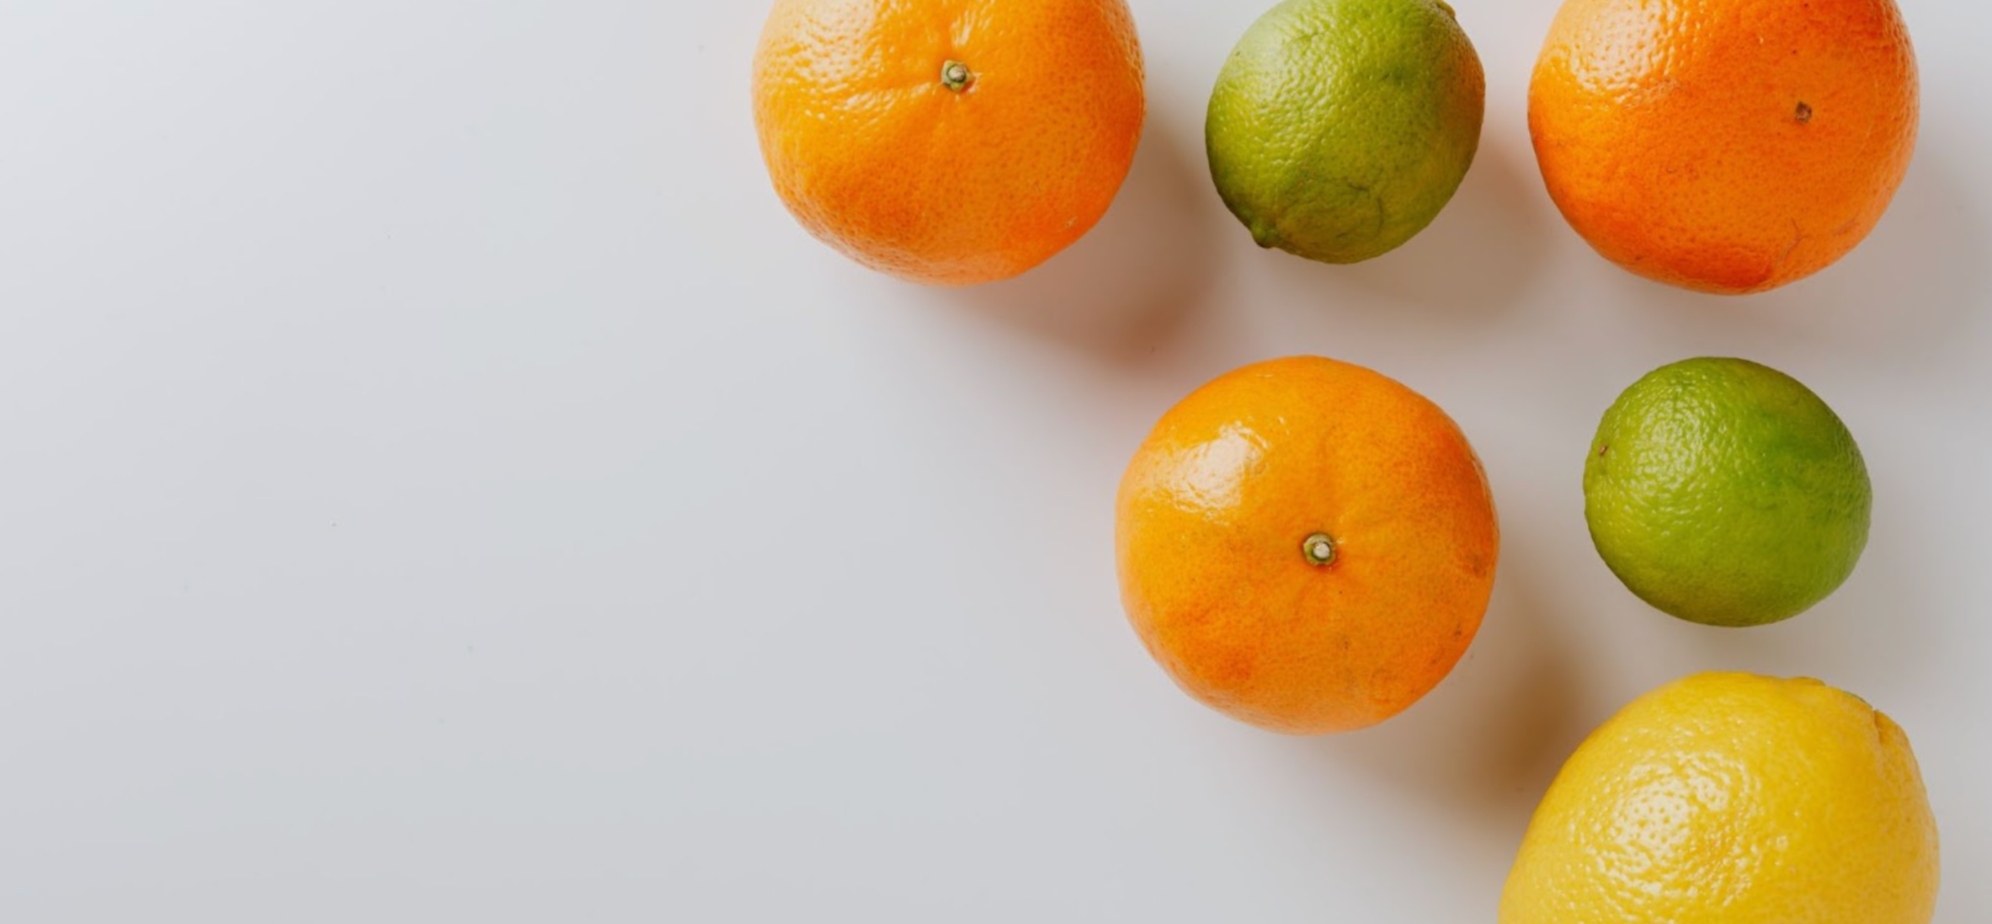 Citrus fruits, including lemons, oranges and limes for vitamin C